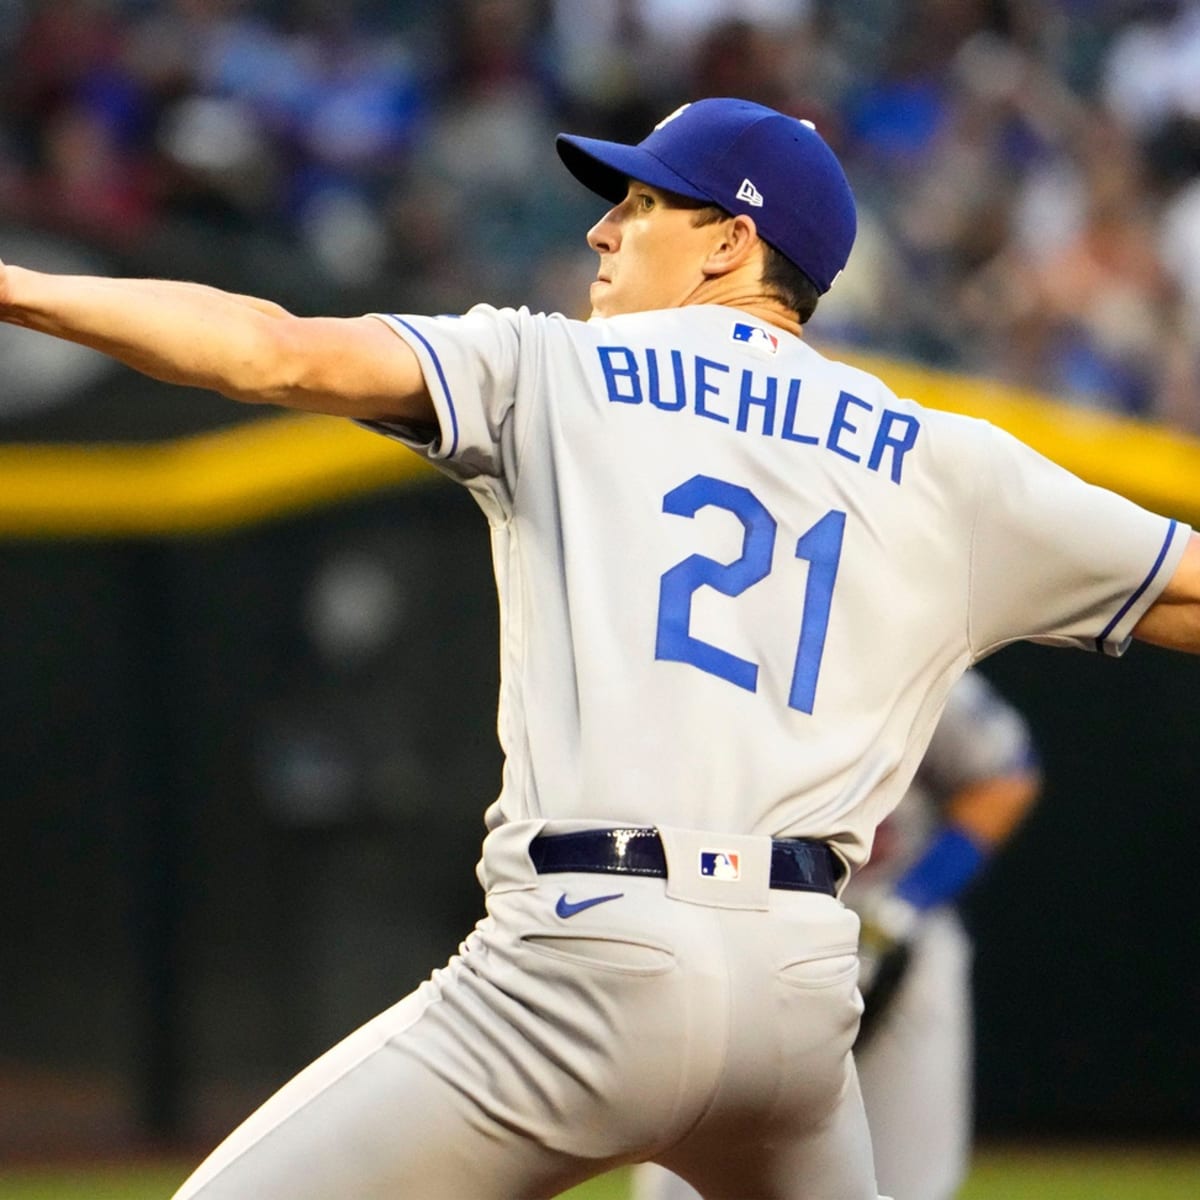 Dodgers' Buehler won't return in 2023